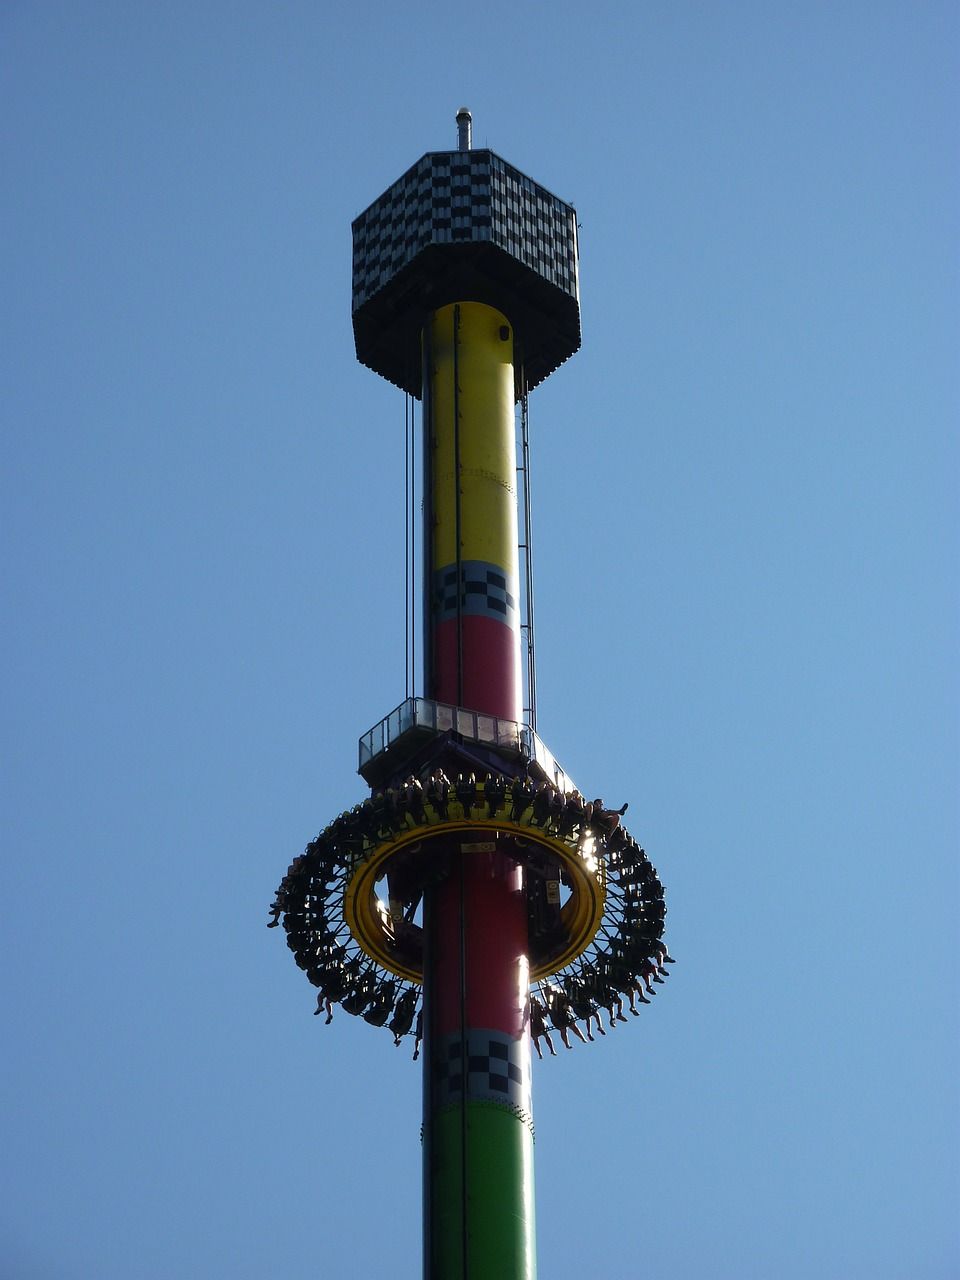 Ride at Amusement Park